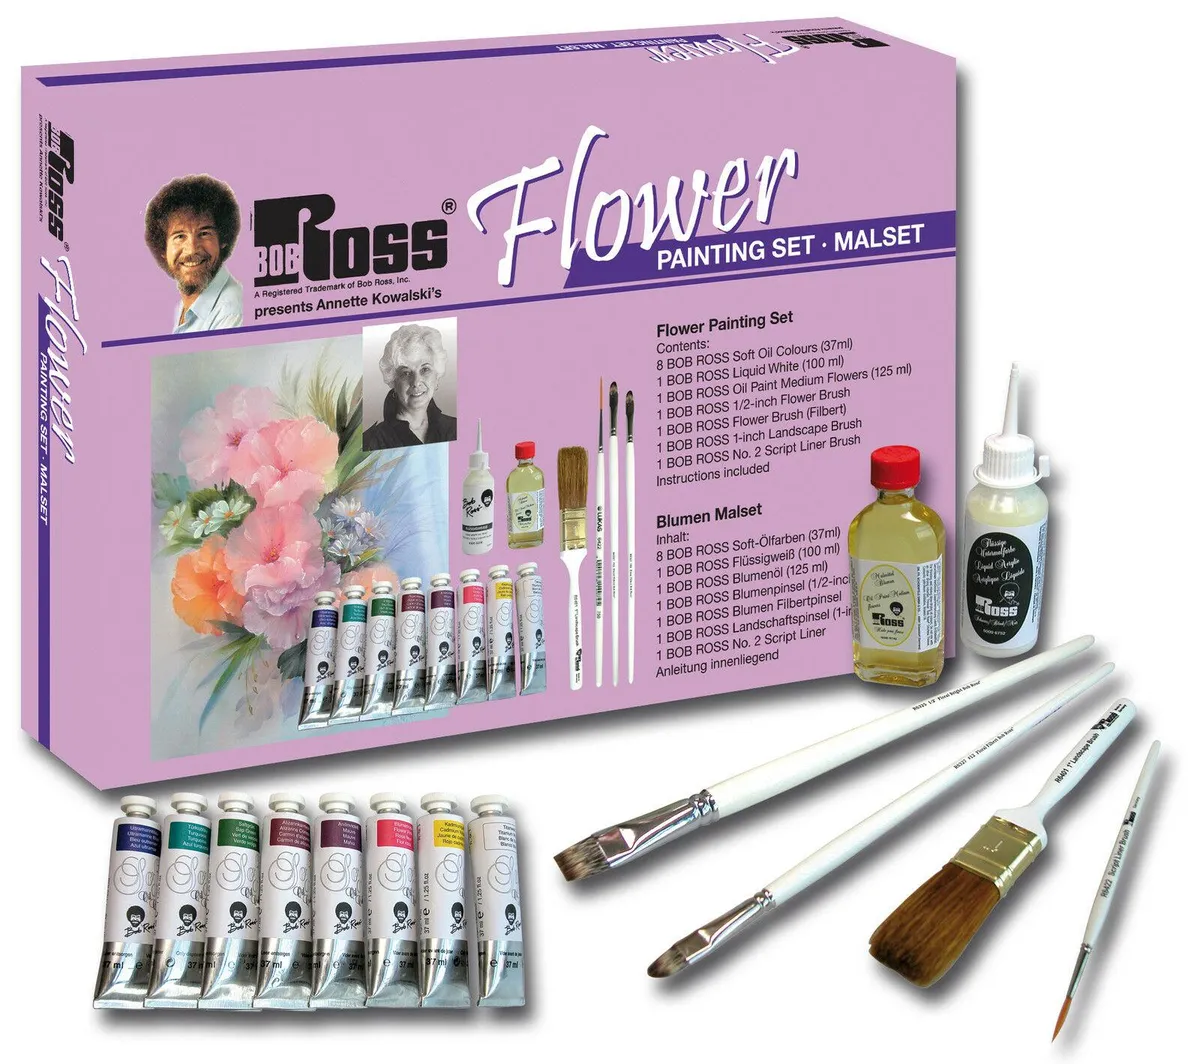 Bob Ross painting kit floral set